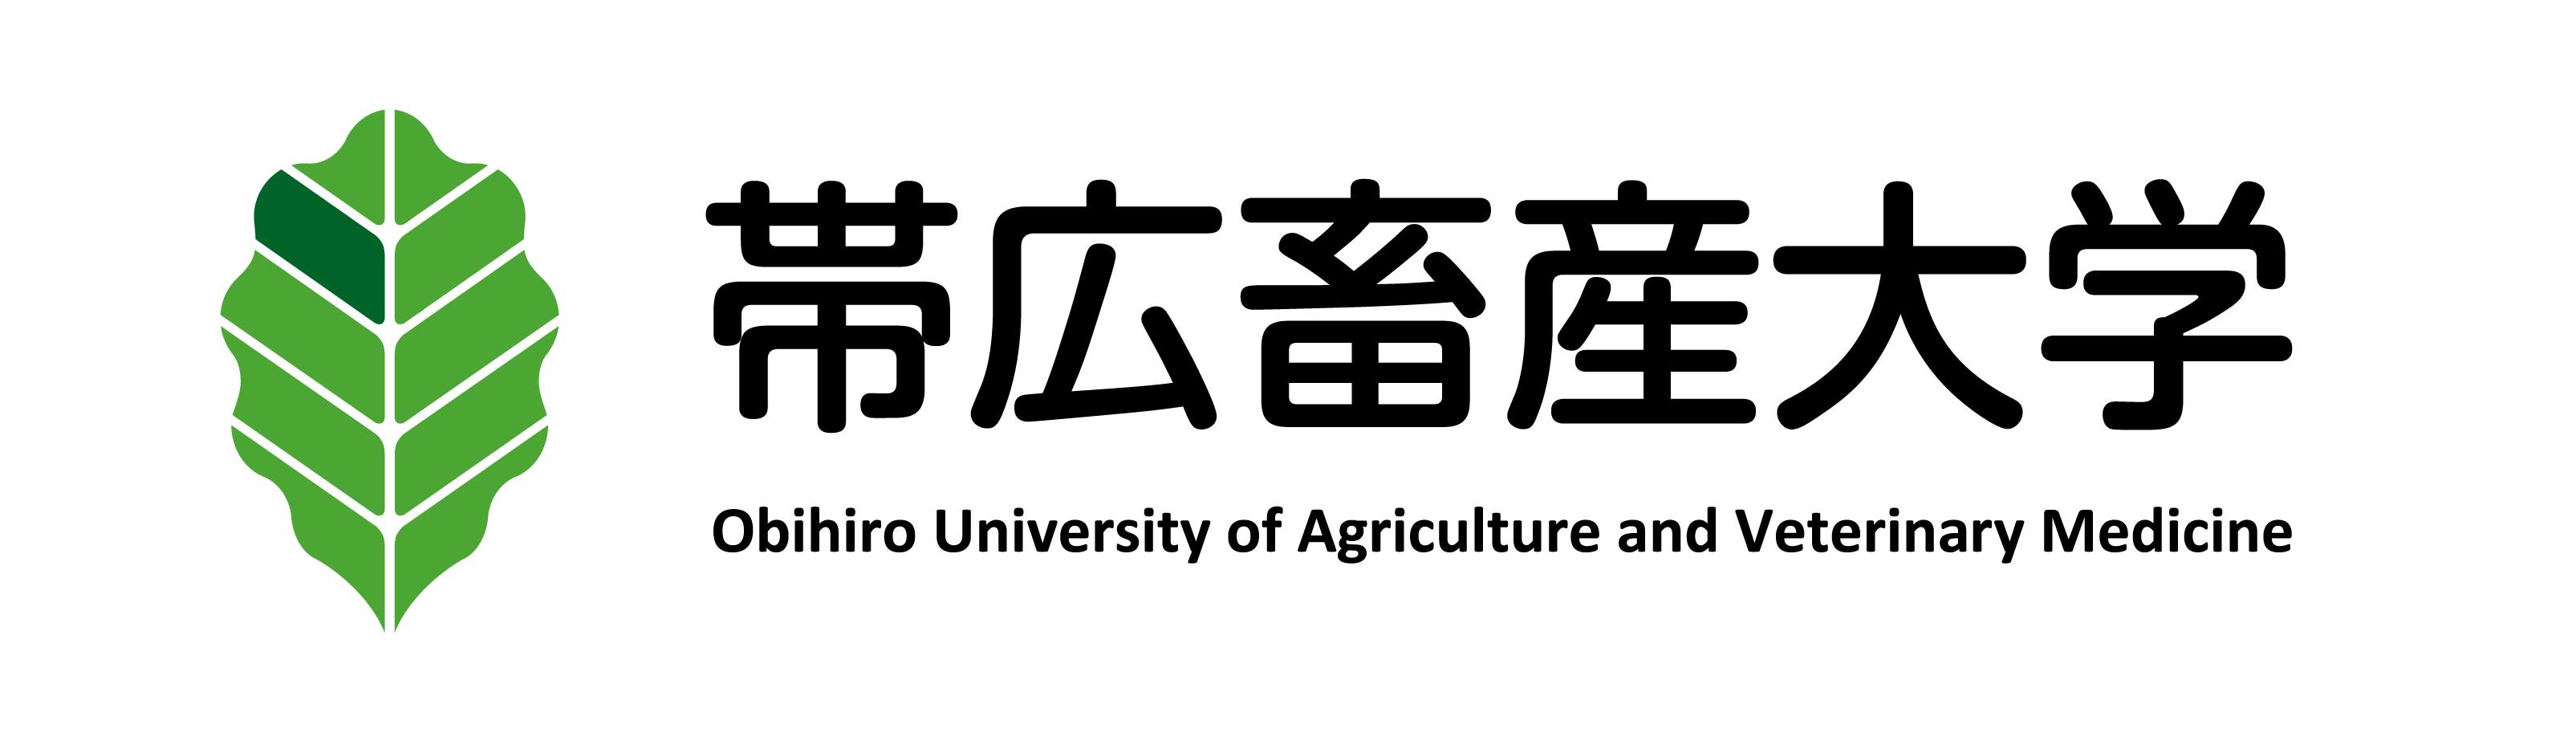 Obihiro University of Agriculture and Veterinary Medicine Japan